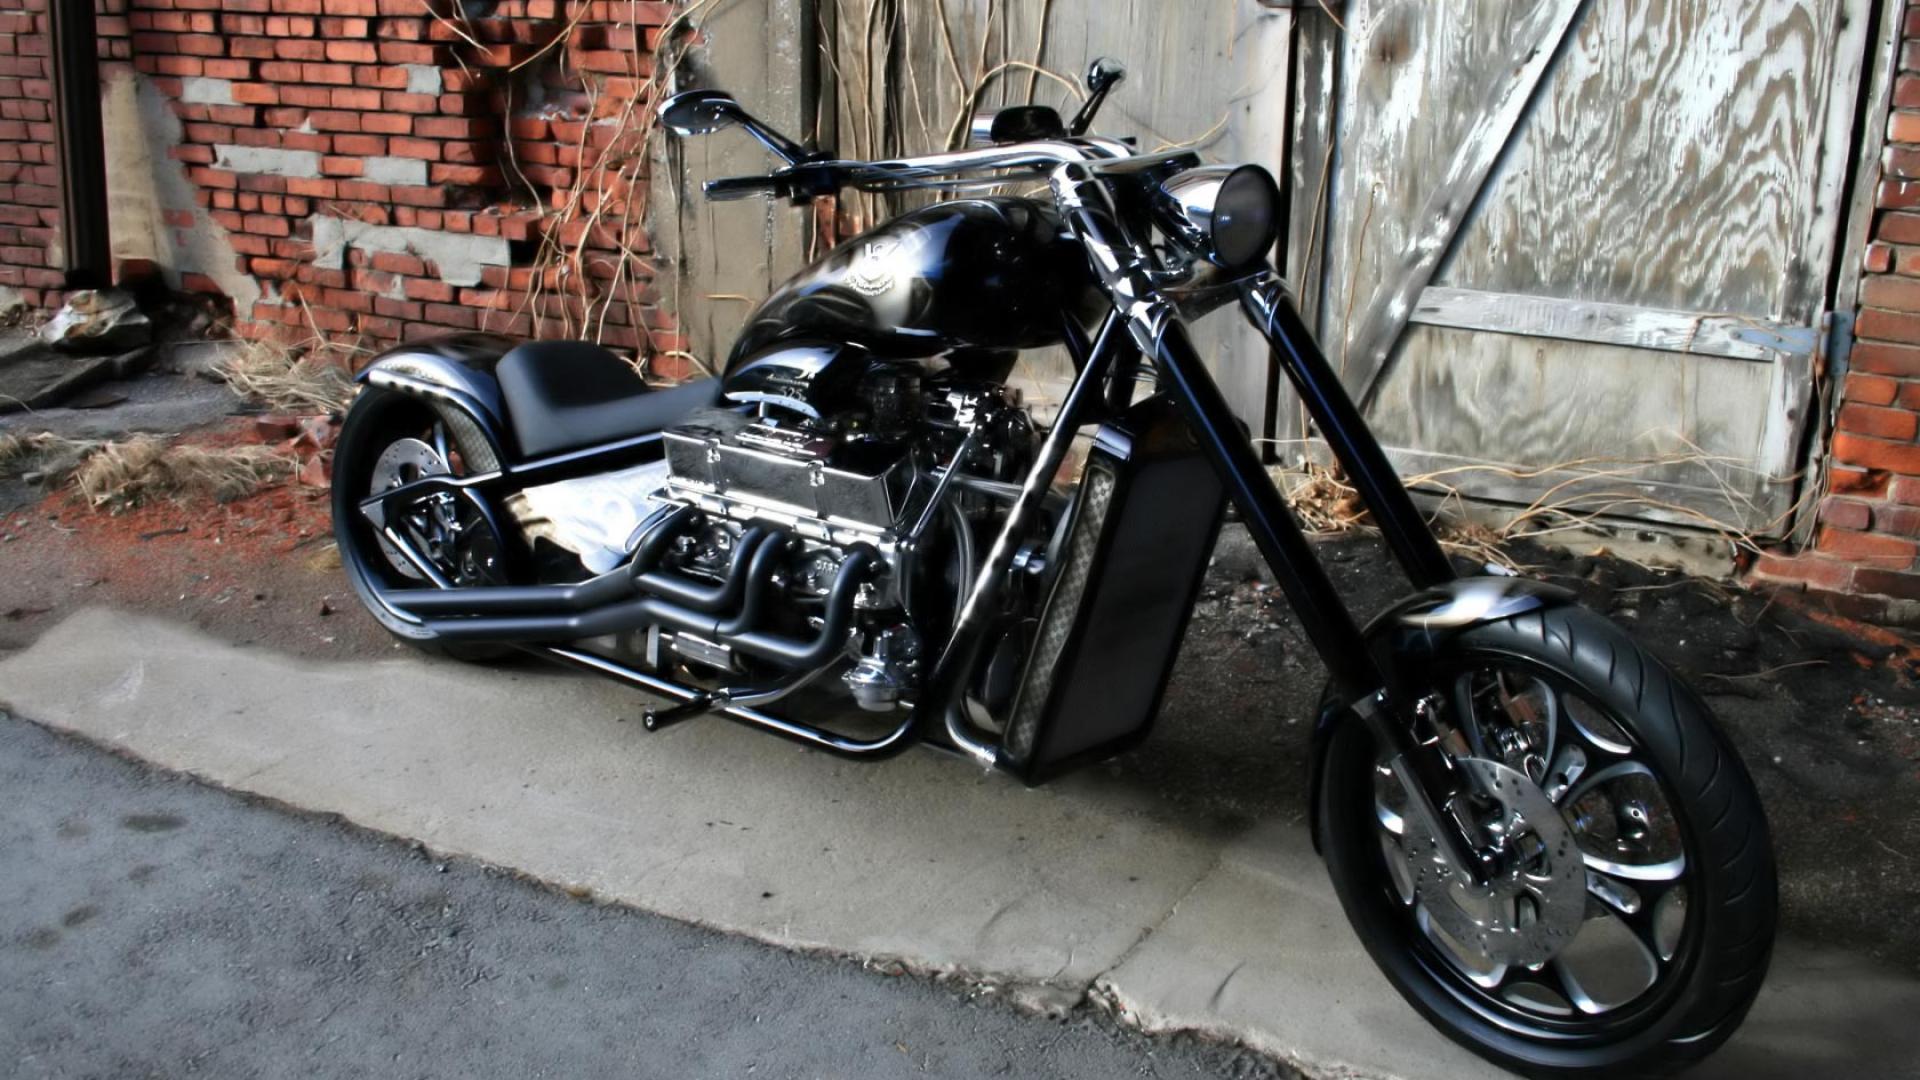 Wallpapers Custom Bike And Girls Harley Davidson Motorcycle Hd ...